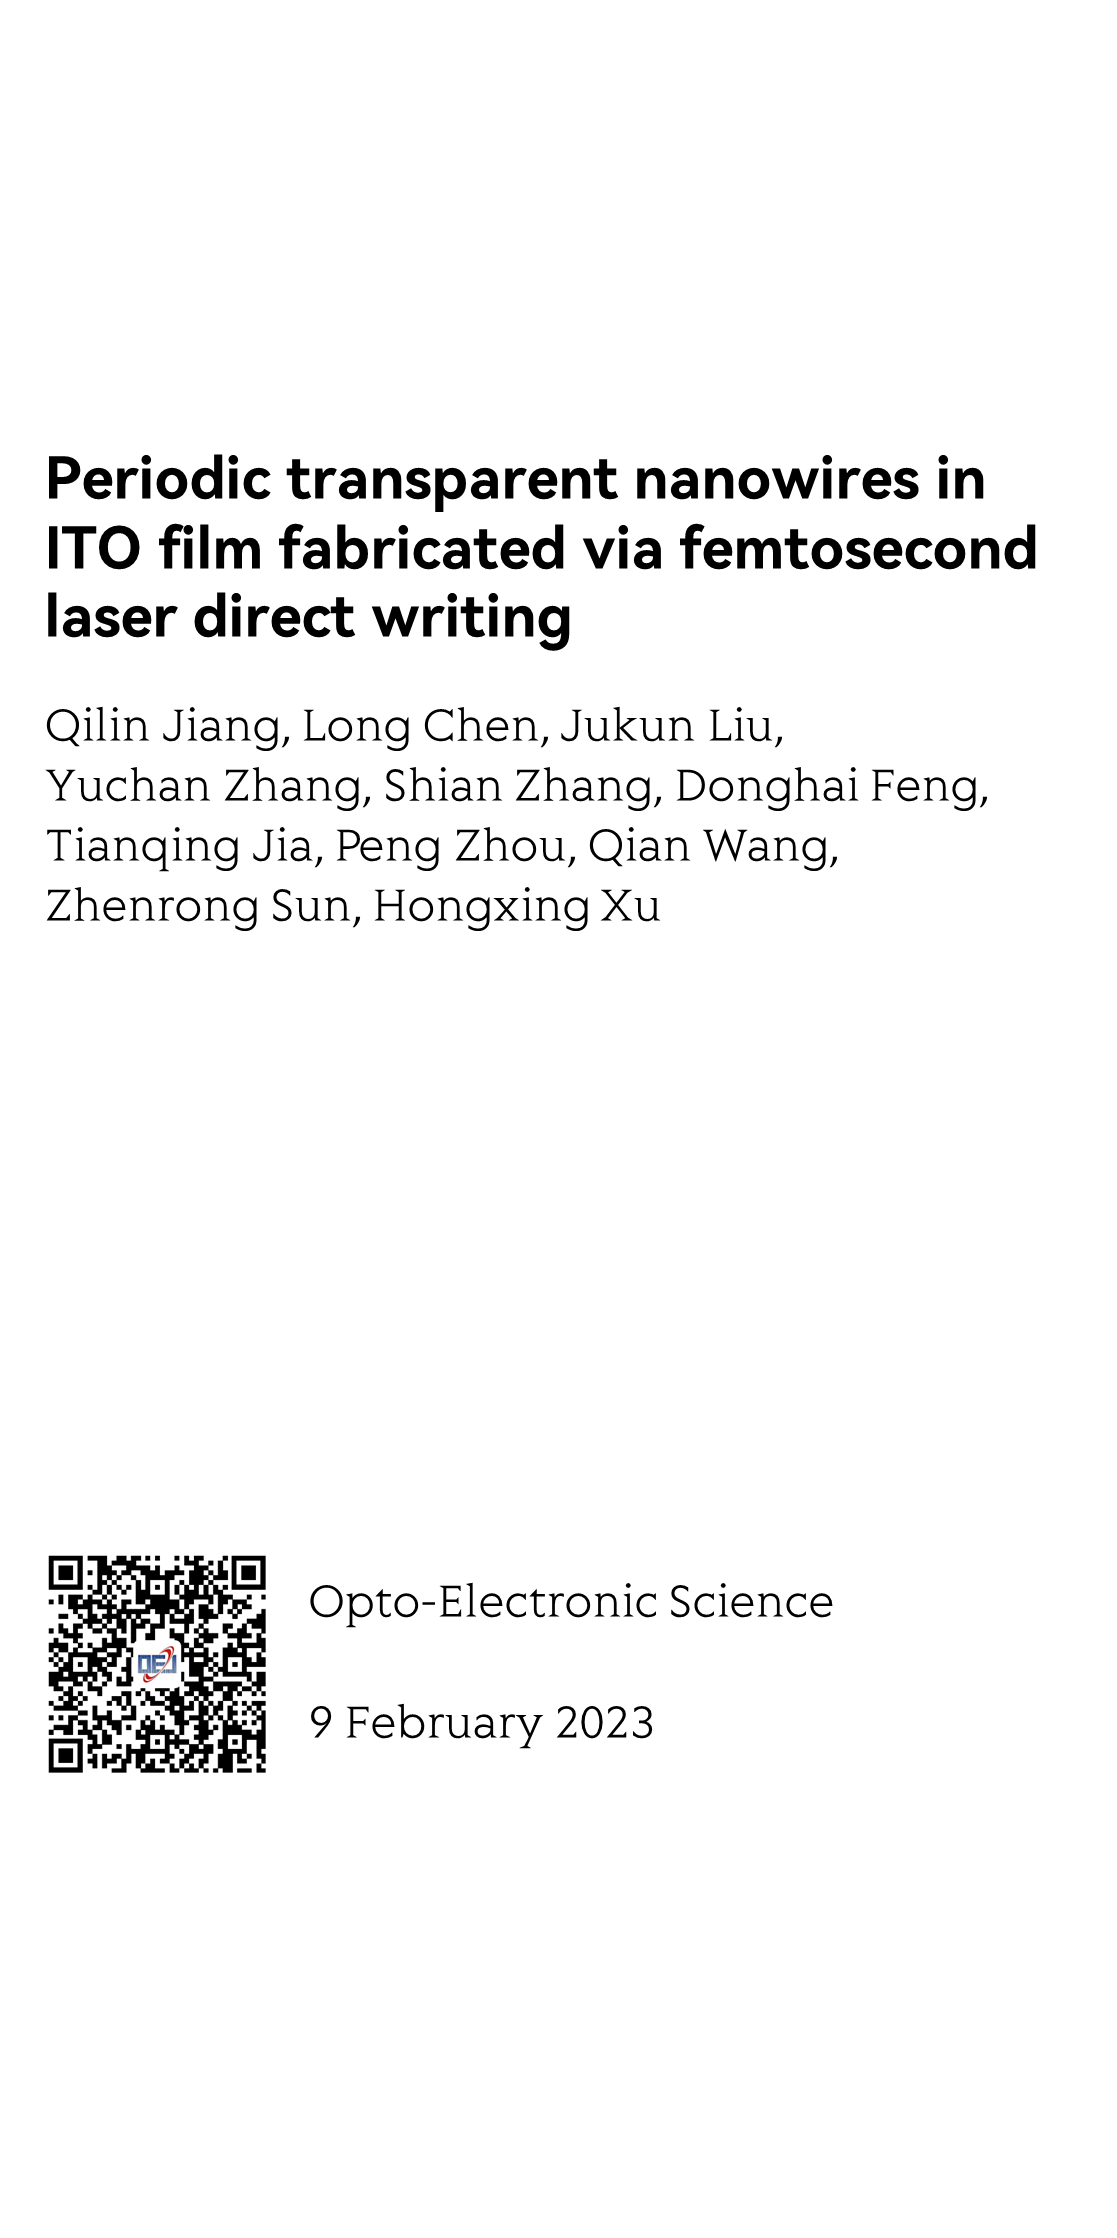 Periodic transparent nanowires in ITO film fabricated via femtosecond laser direct writing_1